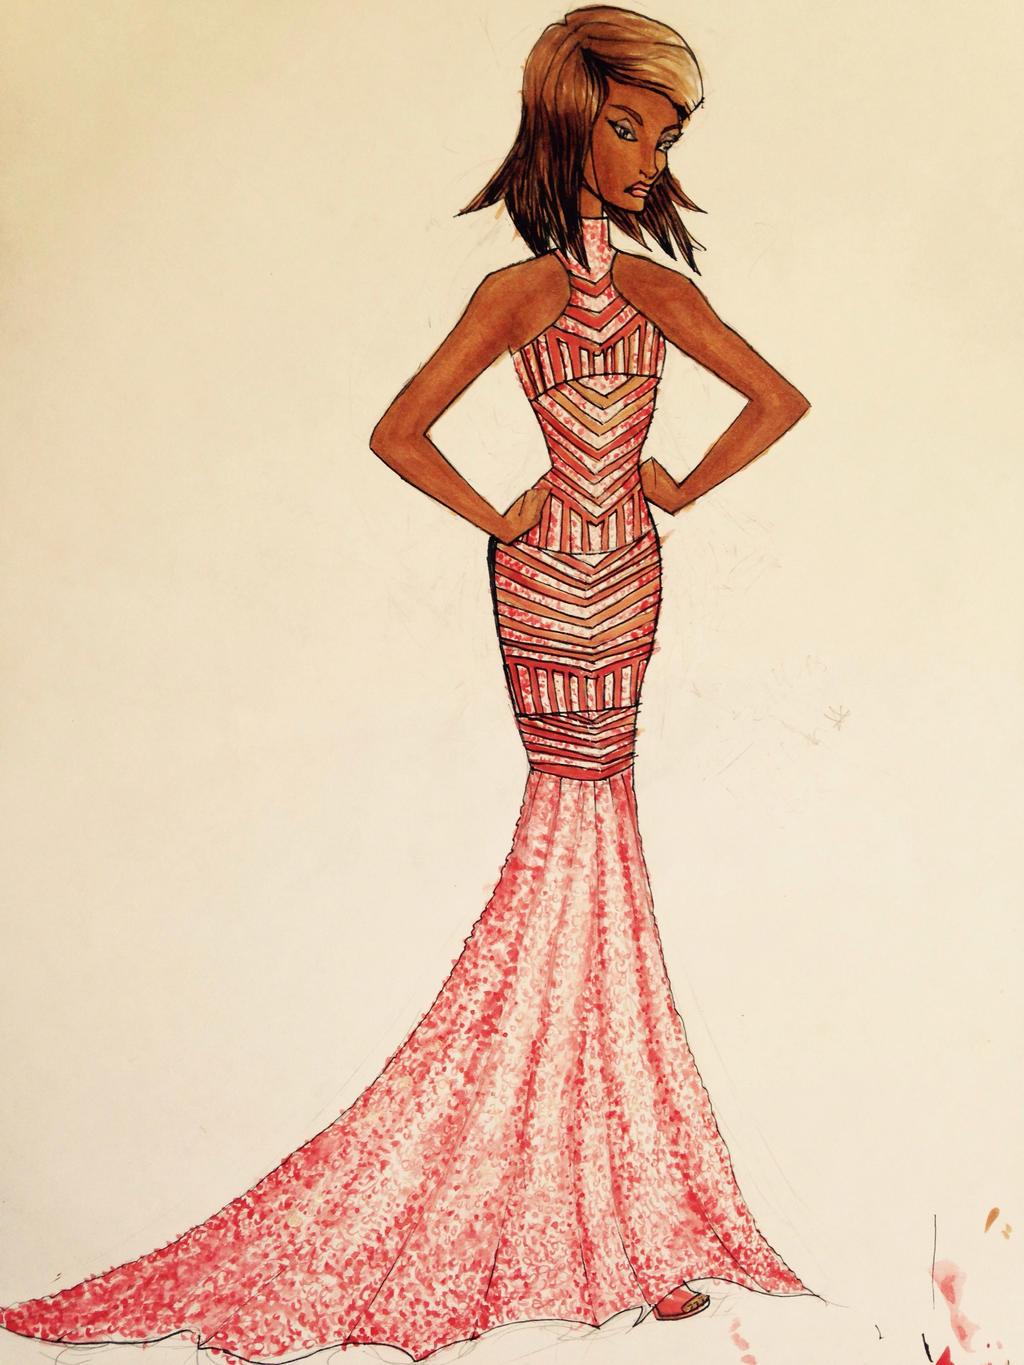 Red Mermaid Prom dress illustration by Rashon02 on DeviantArt